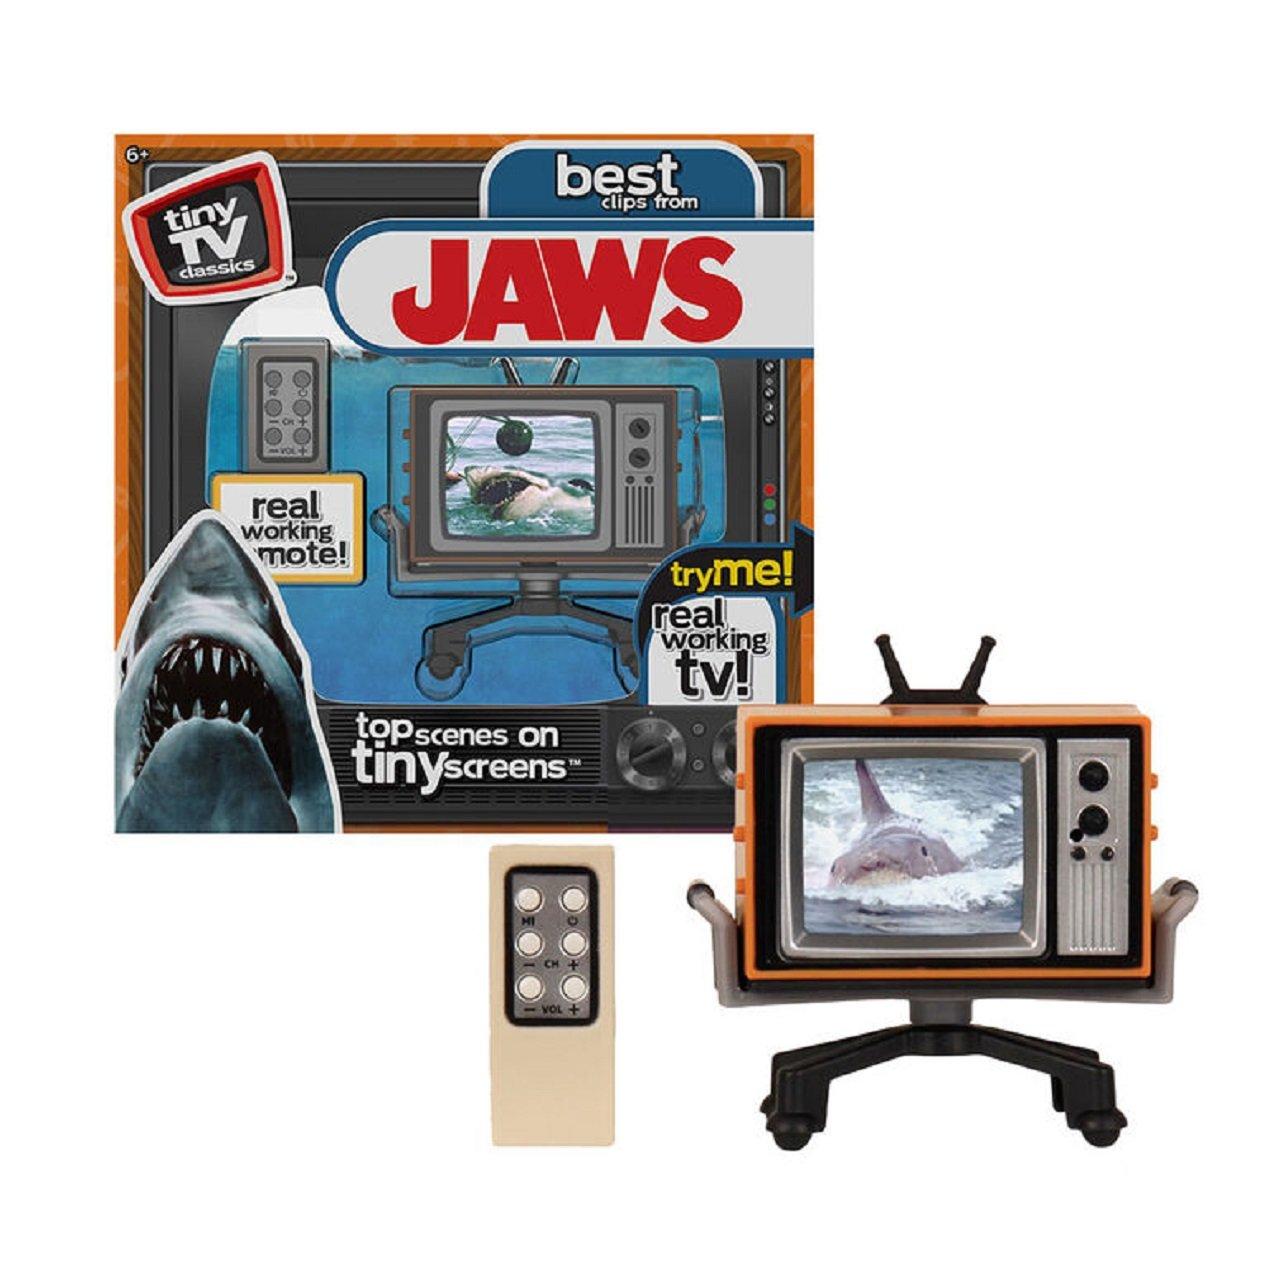 Basic Fun! Tiny TV Classics - Jaws